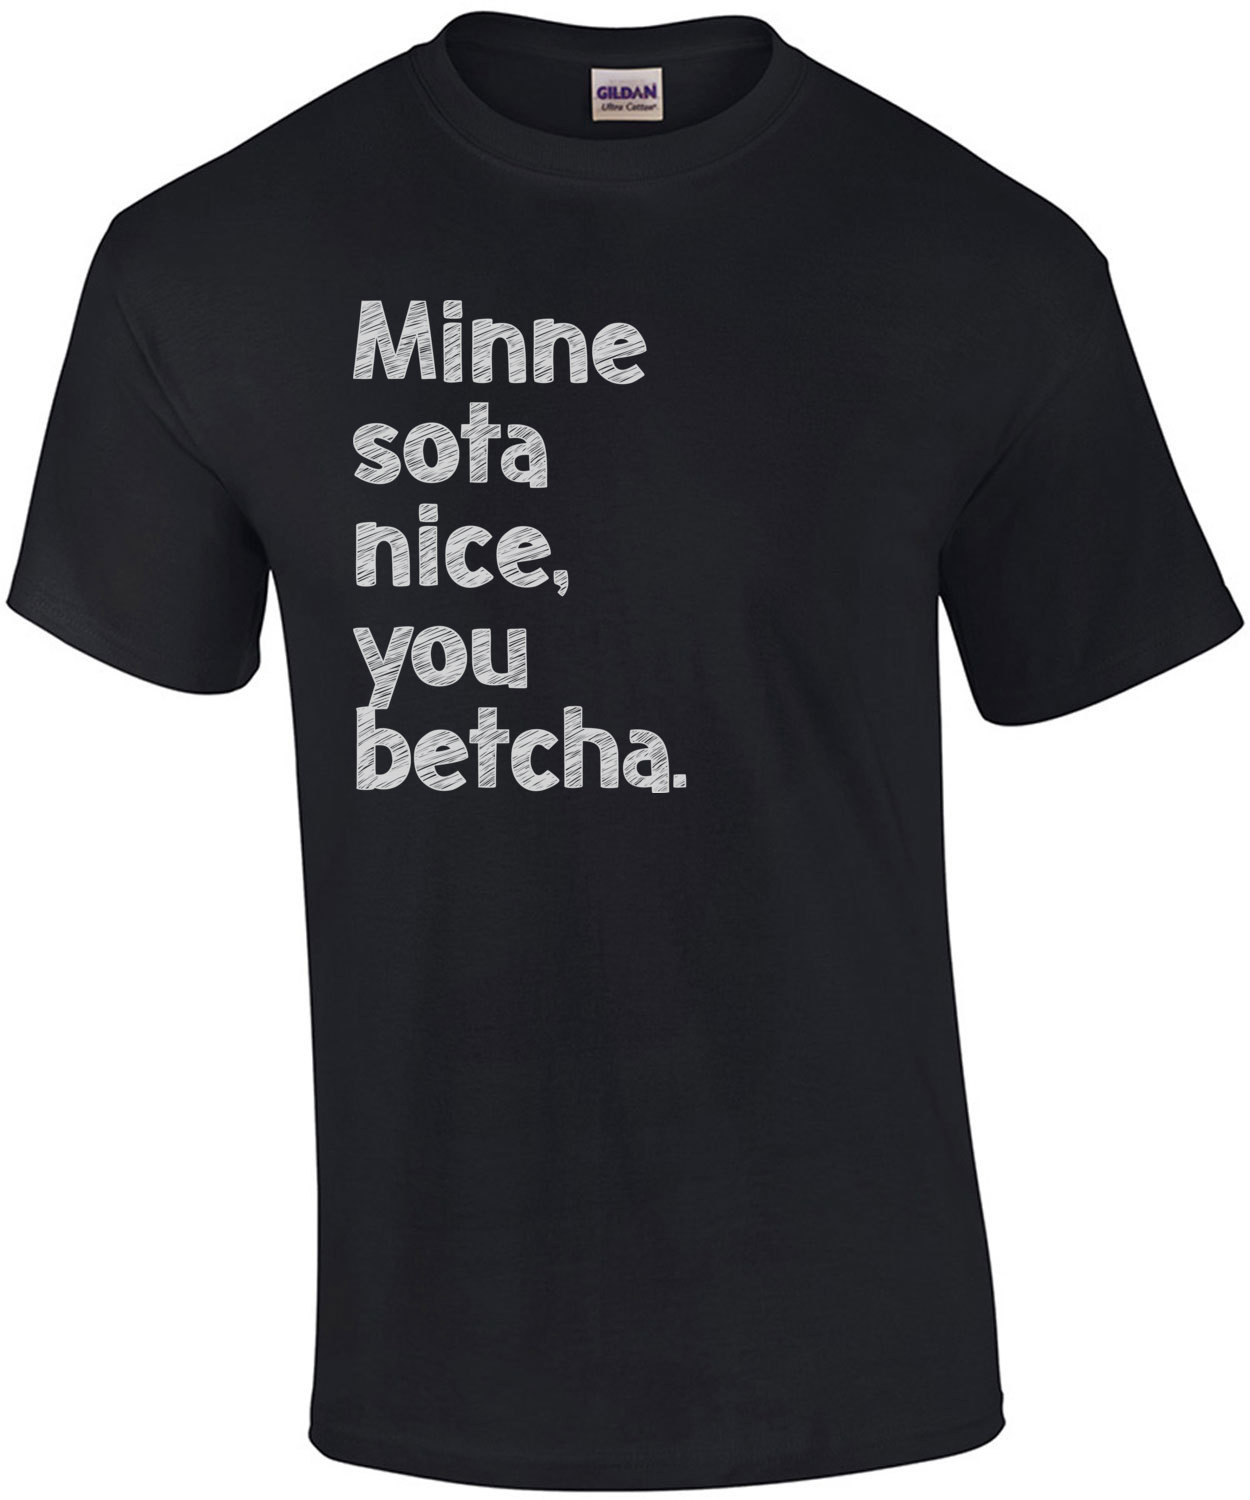 Minne sota nice, you betcha. Minnesota T-Shirt